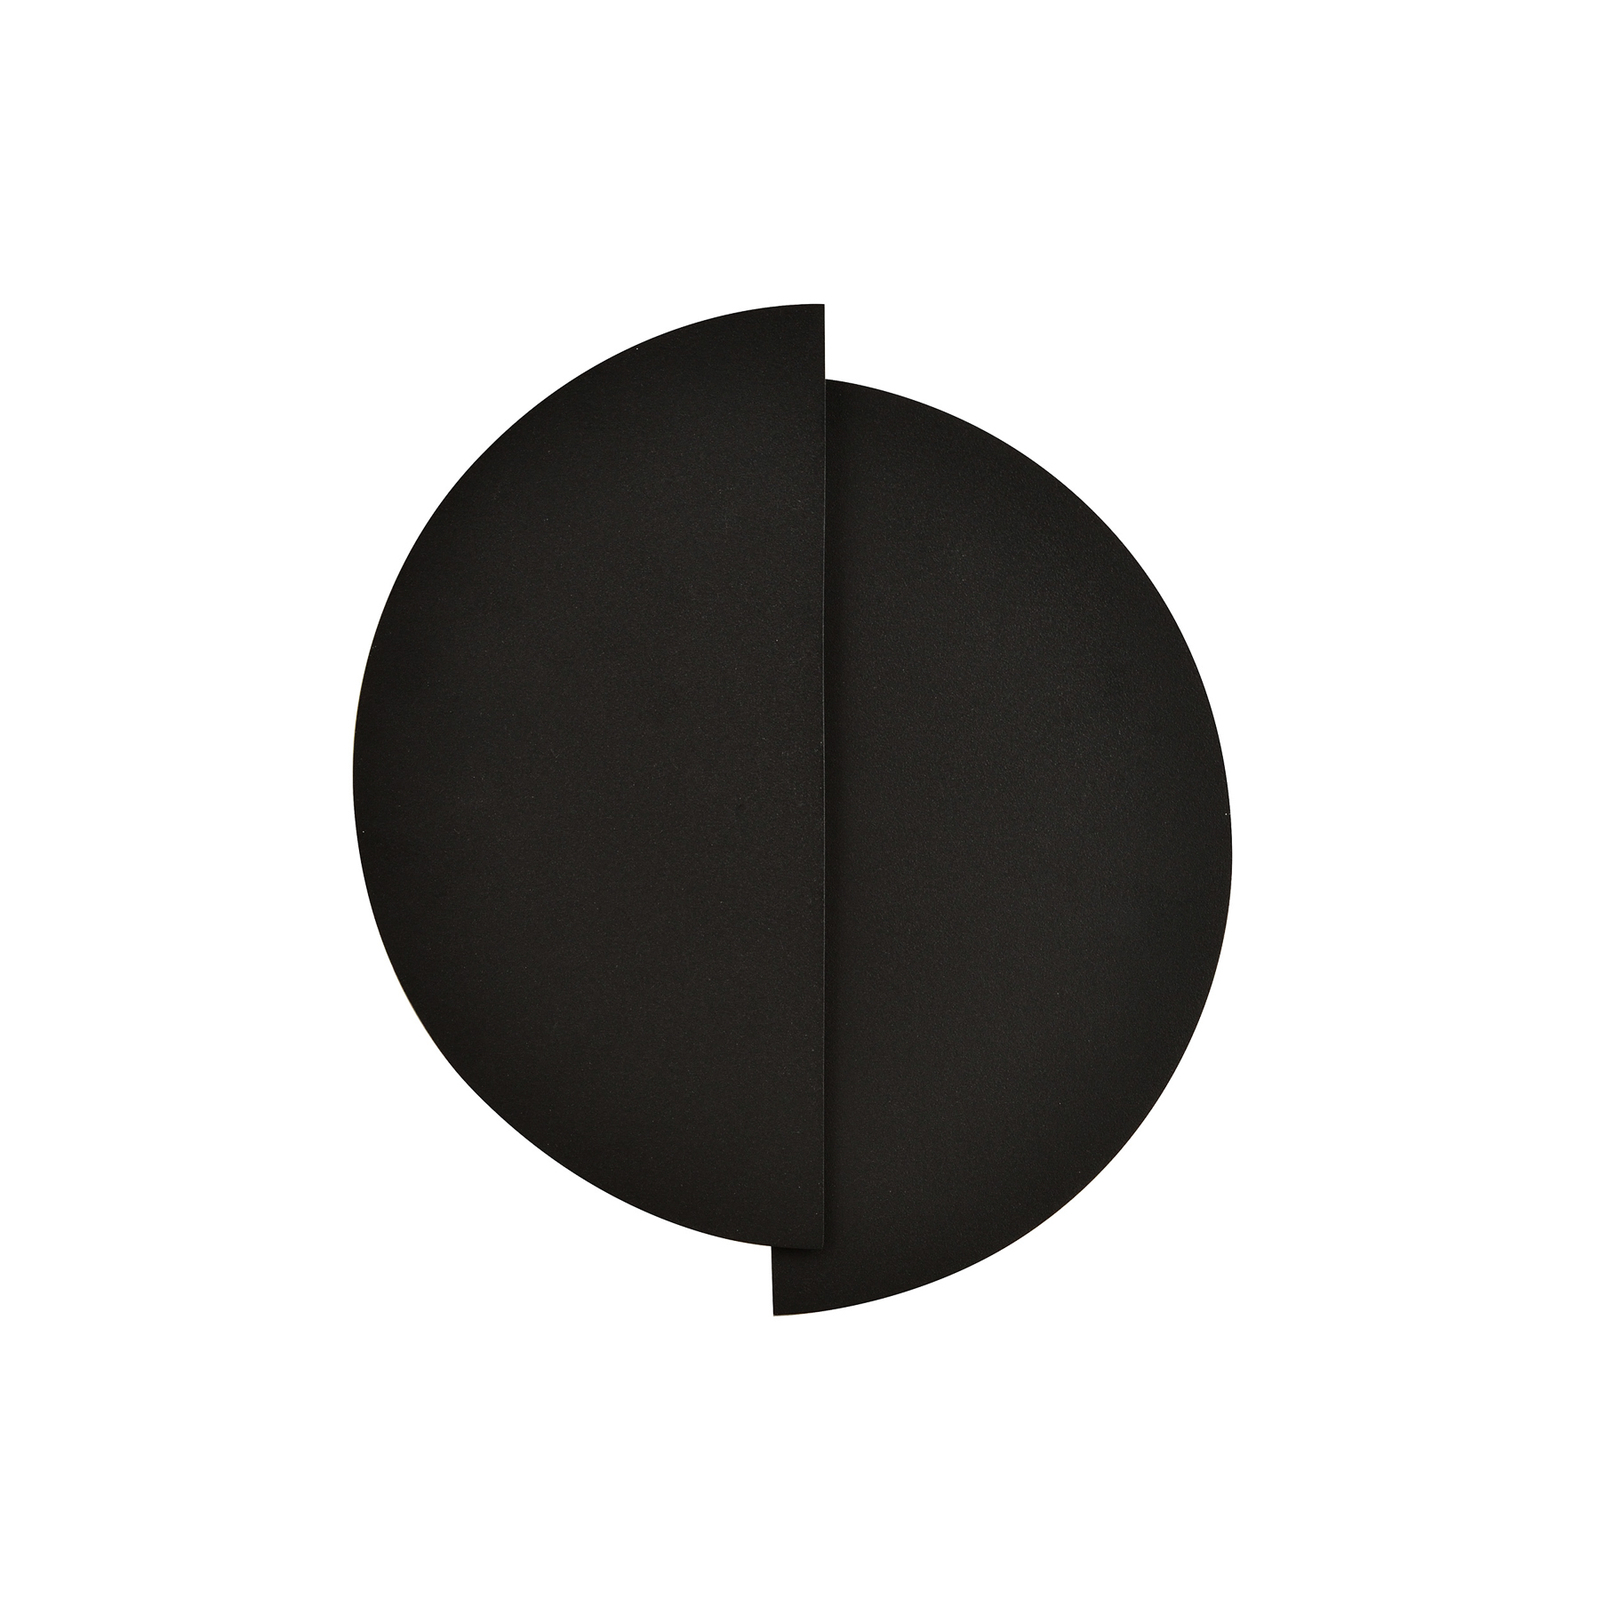 Form 9 wall light, 28 cm x 32 cm, black